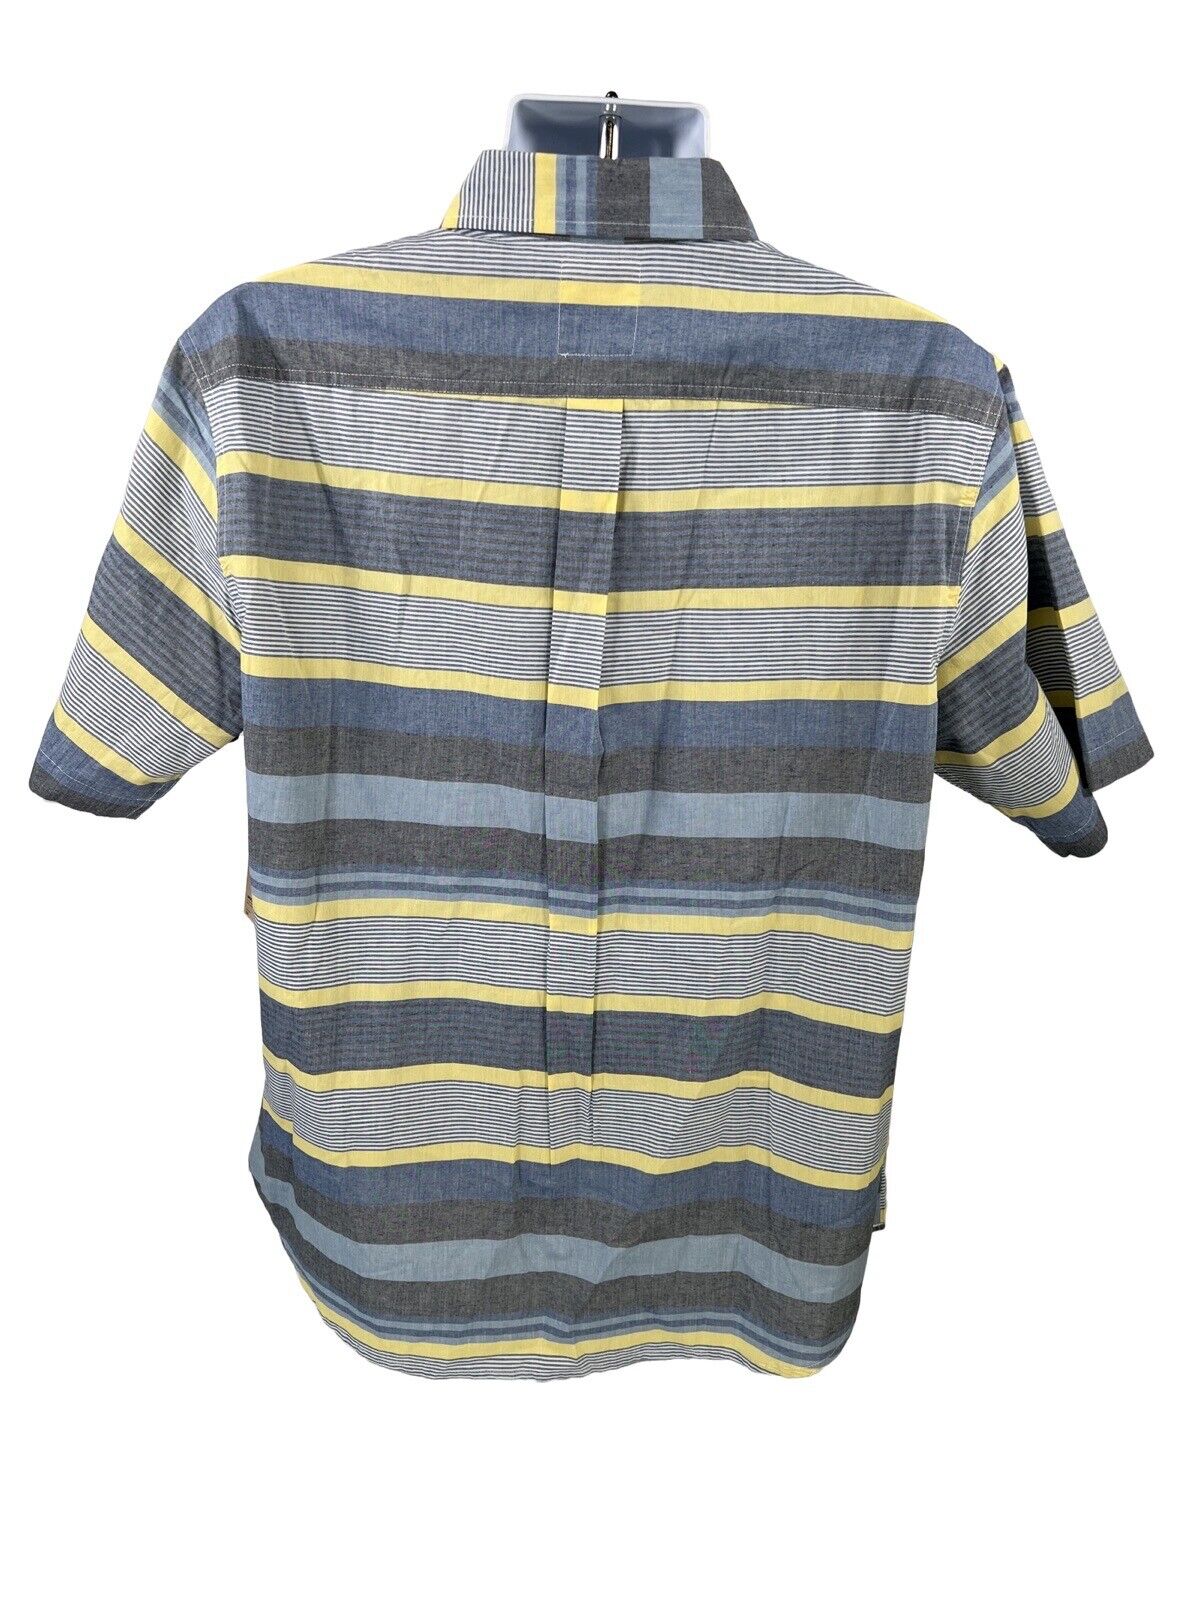 NEW Levi's Men's Blue/Yellow Striped Short Sleeve Button Up Shirt - L